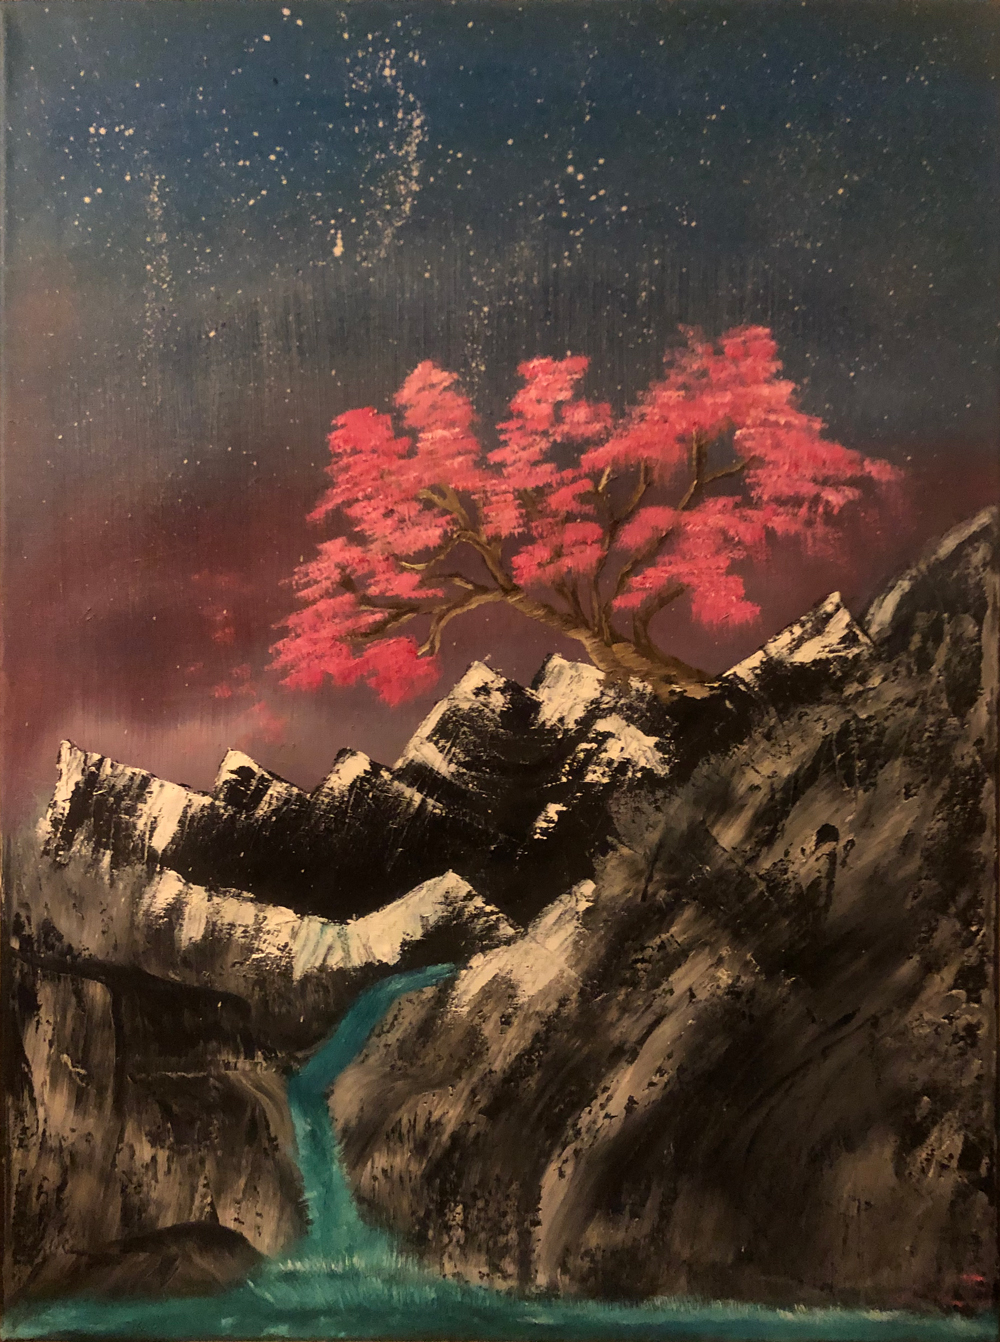 Melanie E Evans, "Cherry blossom tree"